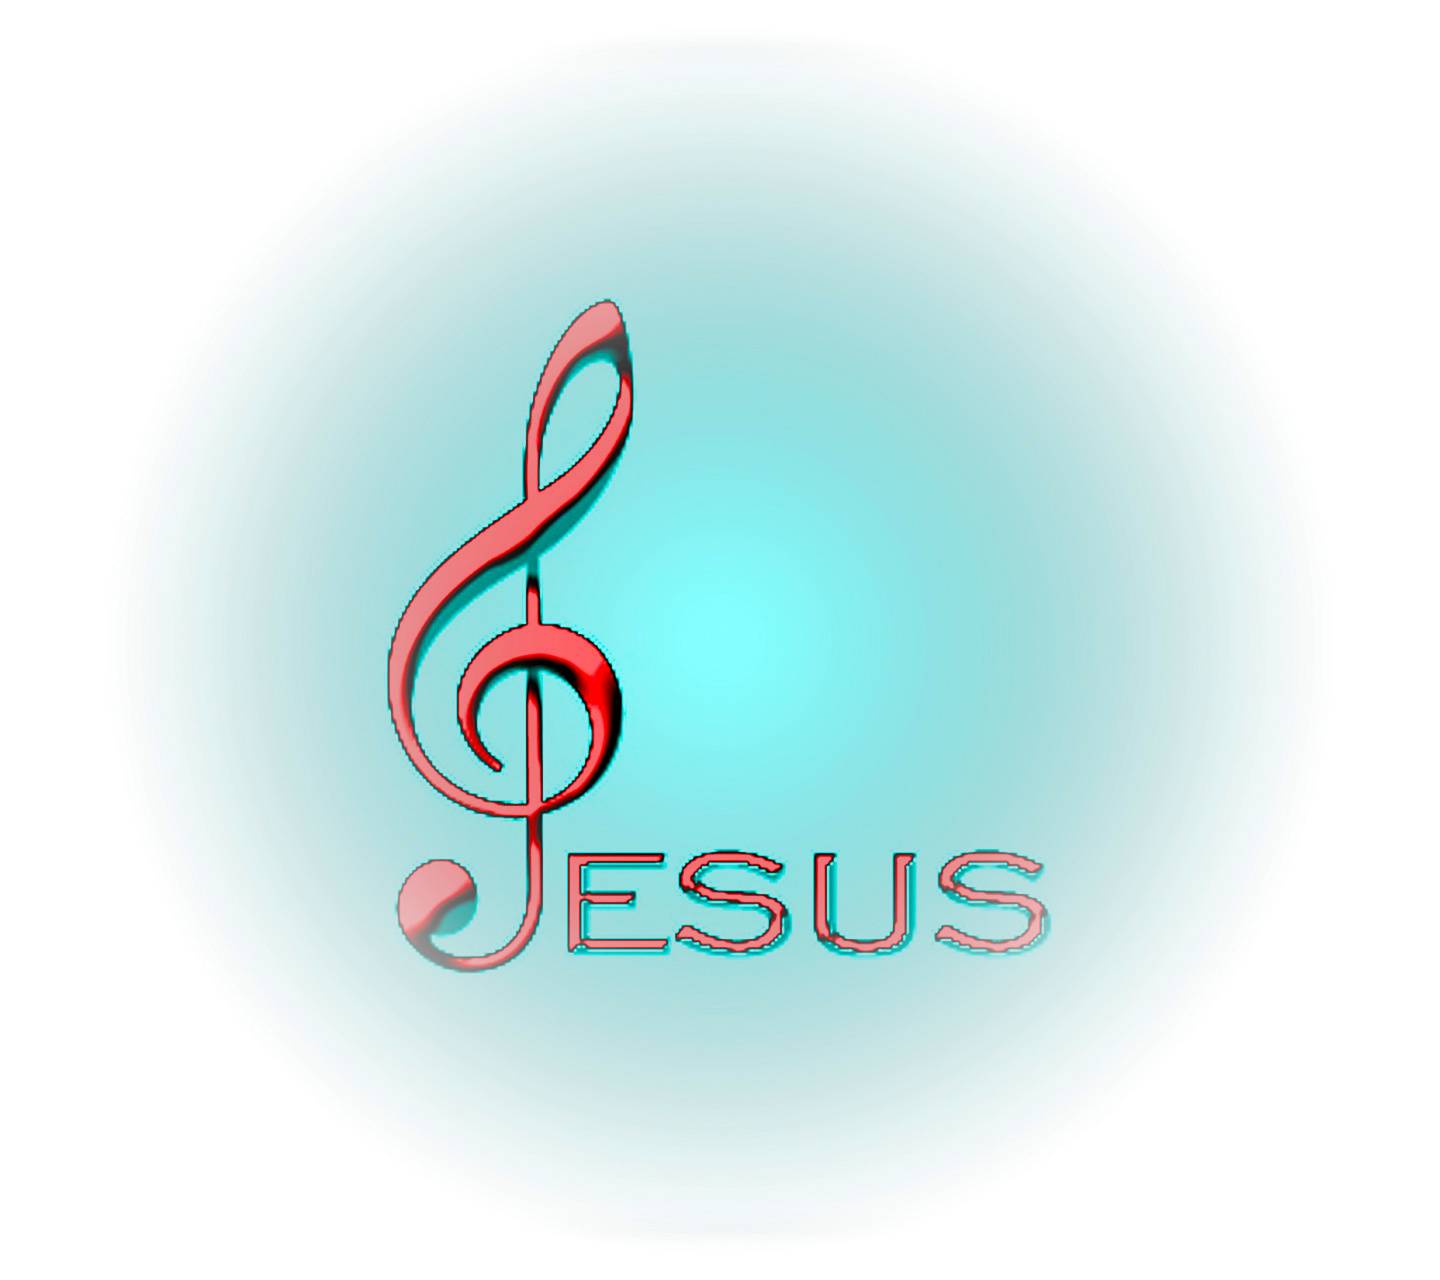 Jesus Music